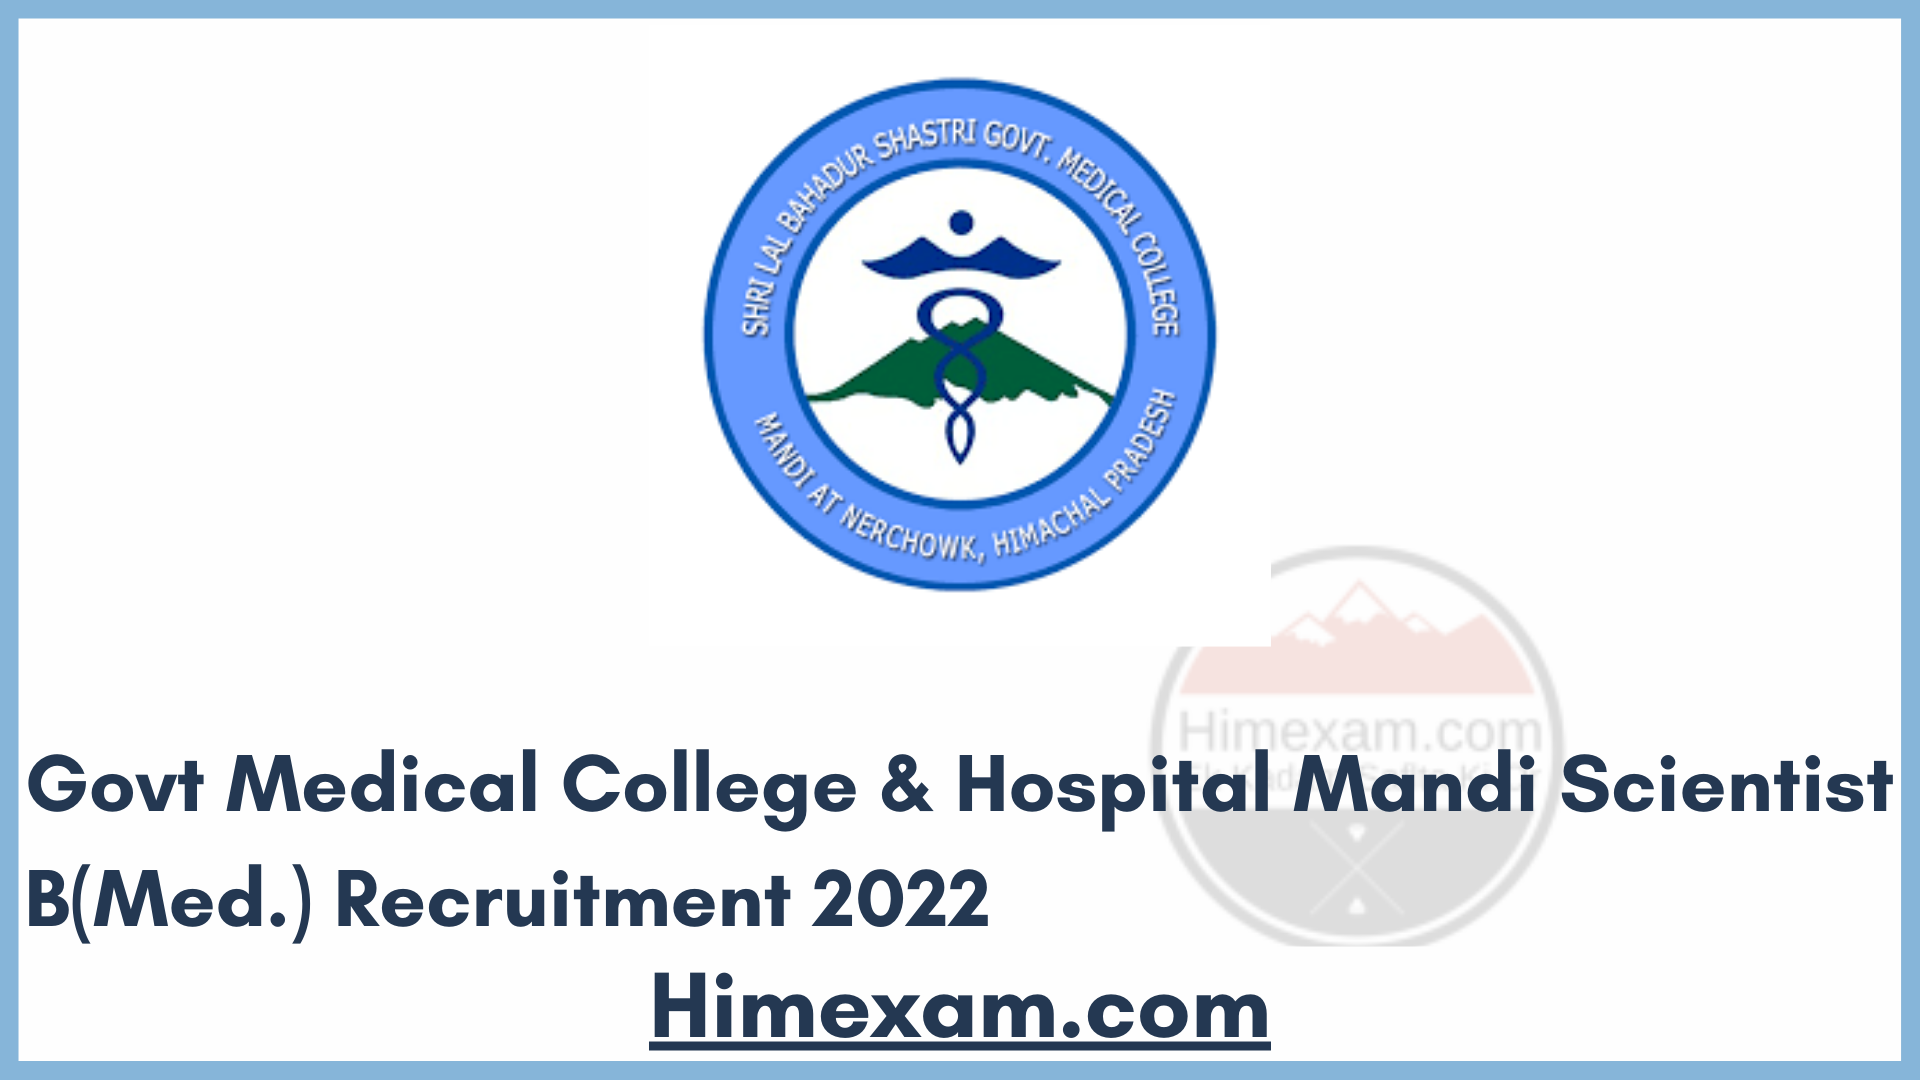 Govt Medical College & Hospital Mandi Scientist B(Med.) Recruitment 2022